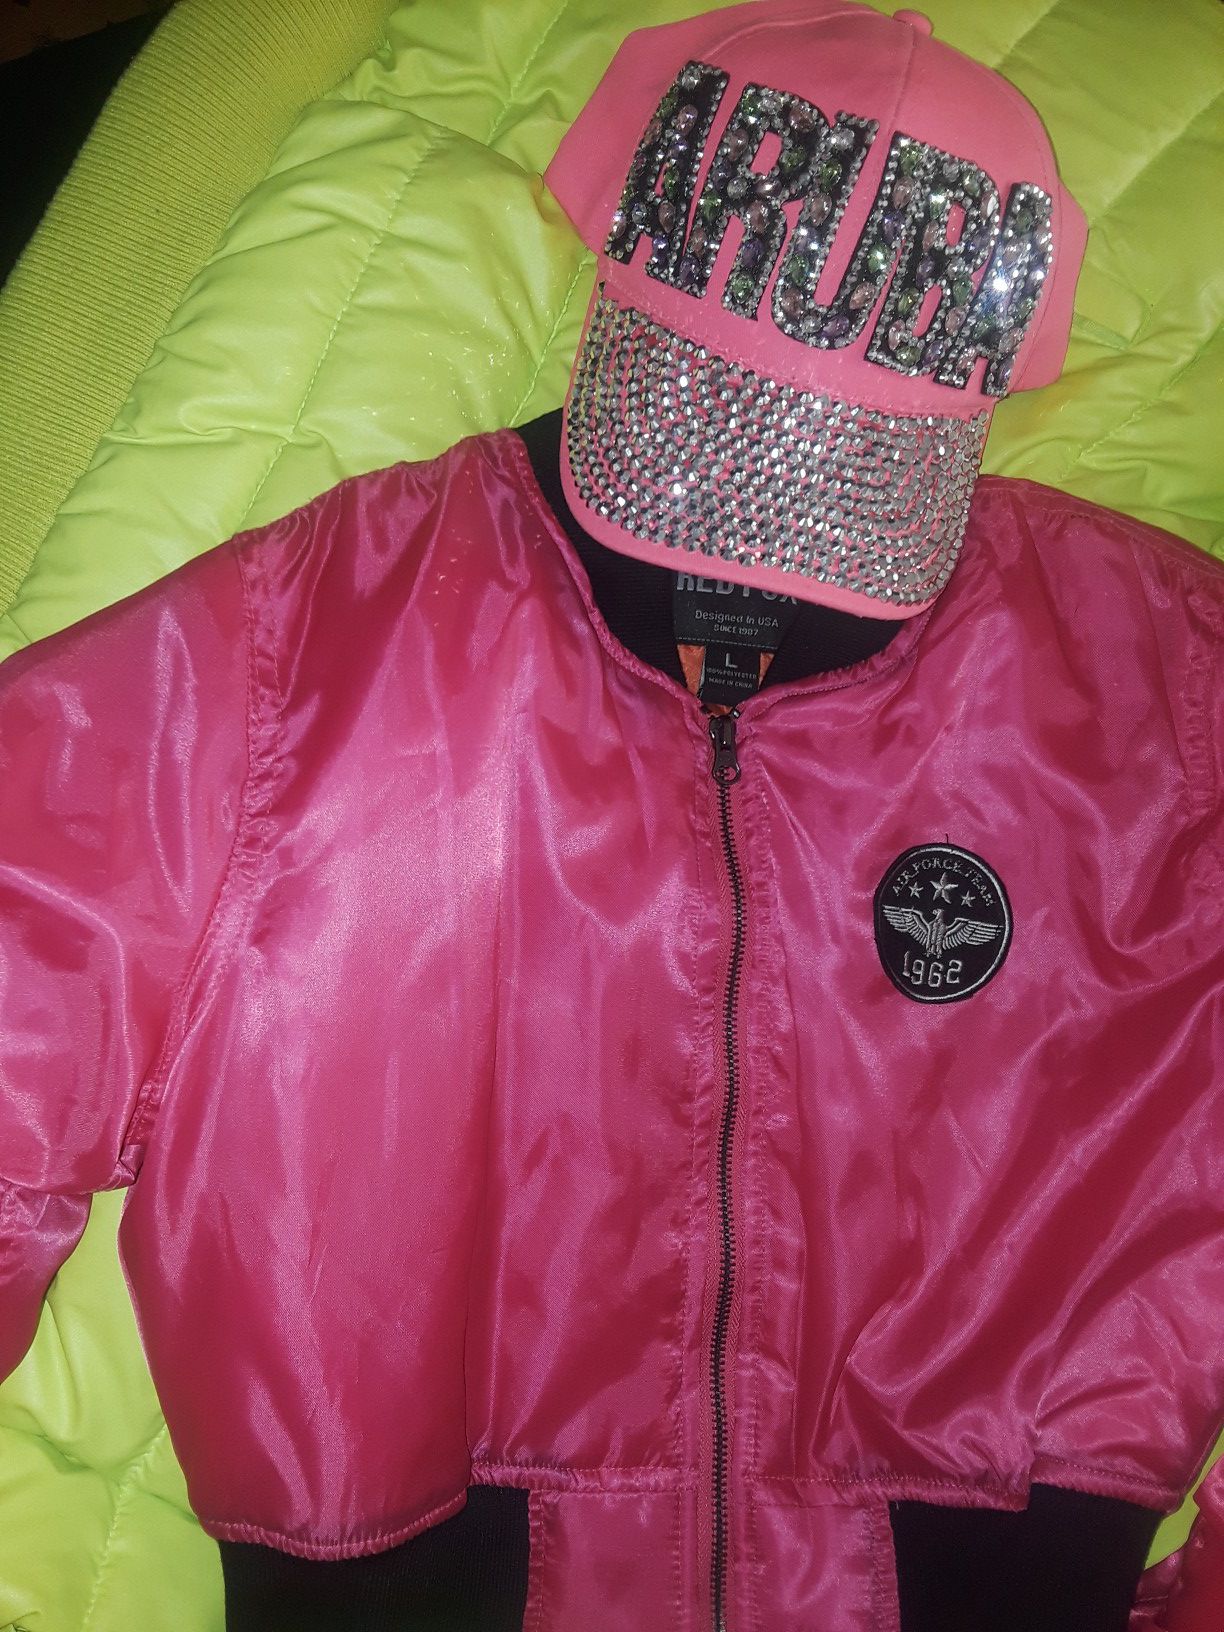 Red fox crop hot pink jacket brand new!